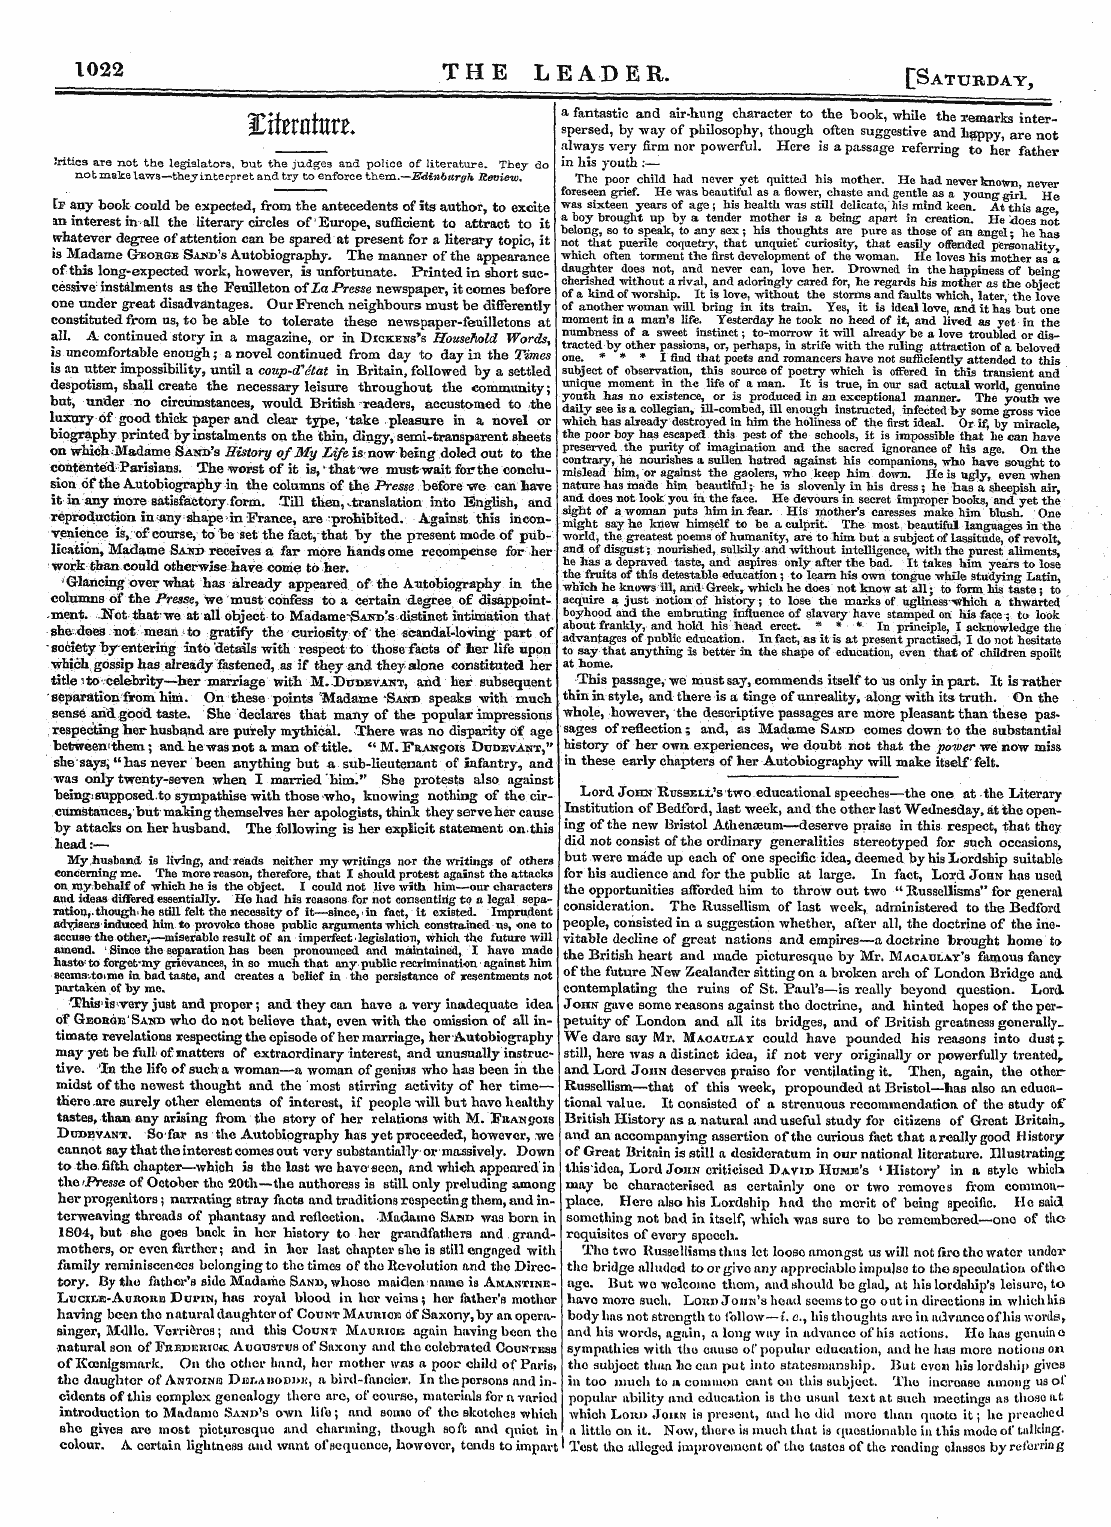 Leader (1850-1860): jS F Y, Country edition - R*Ry*± Iluerflttltb*